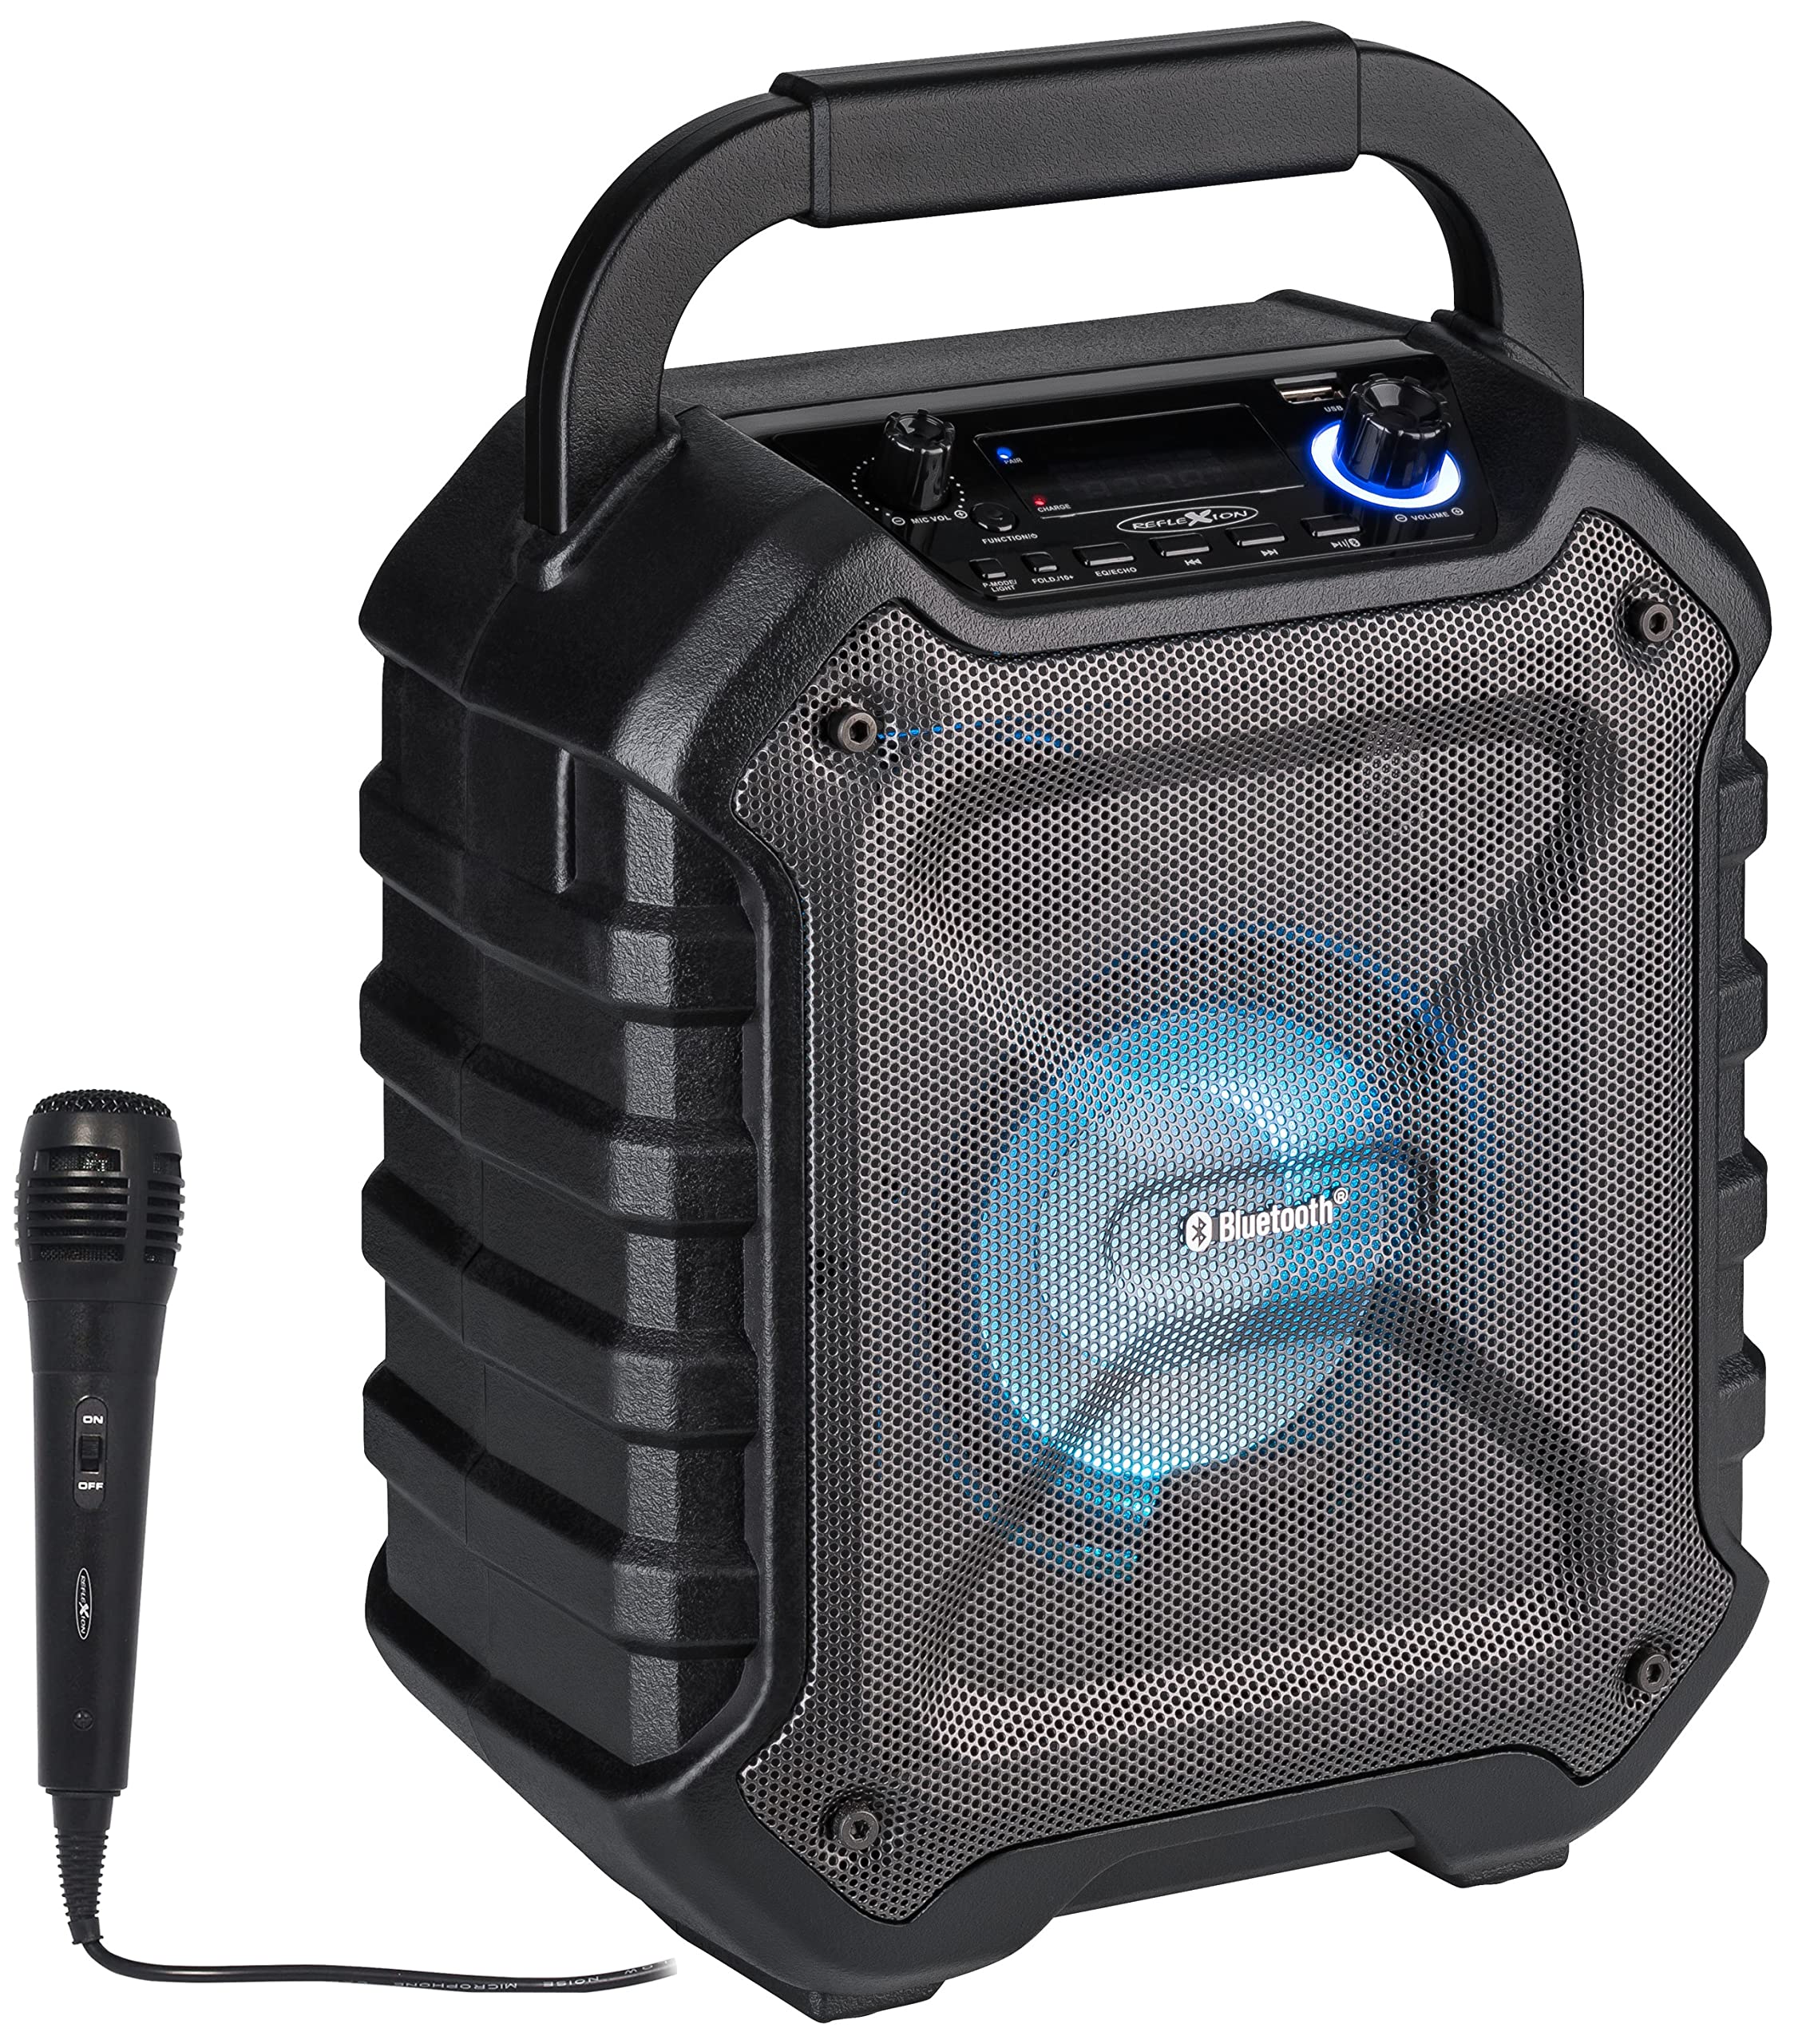 REFLEXION PS06BT kompakte PA-Anlage, mobil mit Akku, Lichteffekten und Karaoke-Funktion, inklusive Mikrofon (Bluetooth, USB, AUX, 160 Watt), schwarz